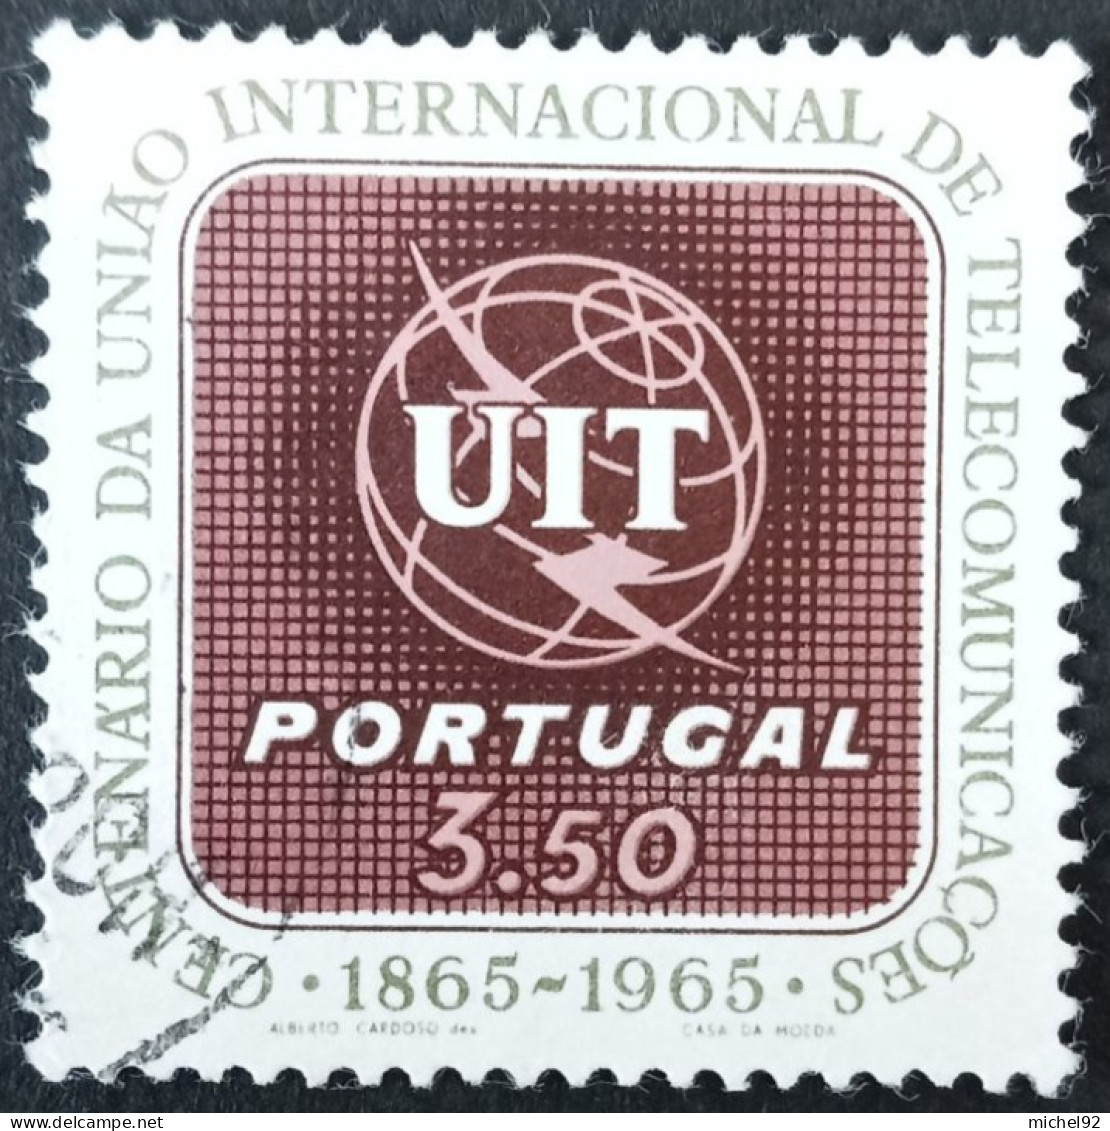 Portugal 1965 - YT N°964 - Oblitéré - Usati